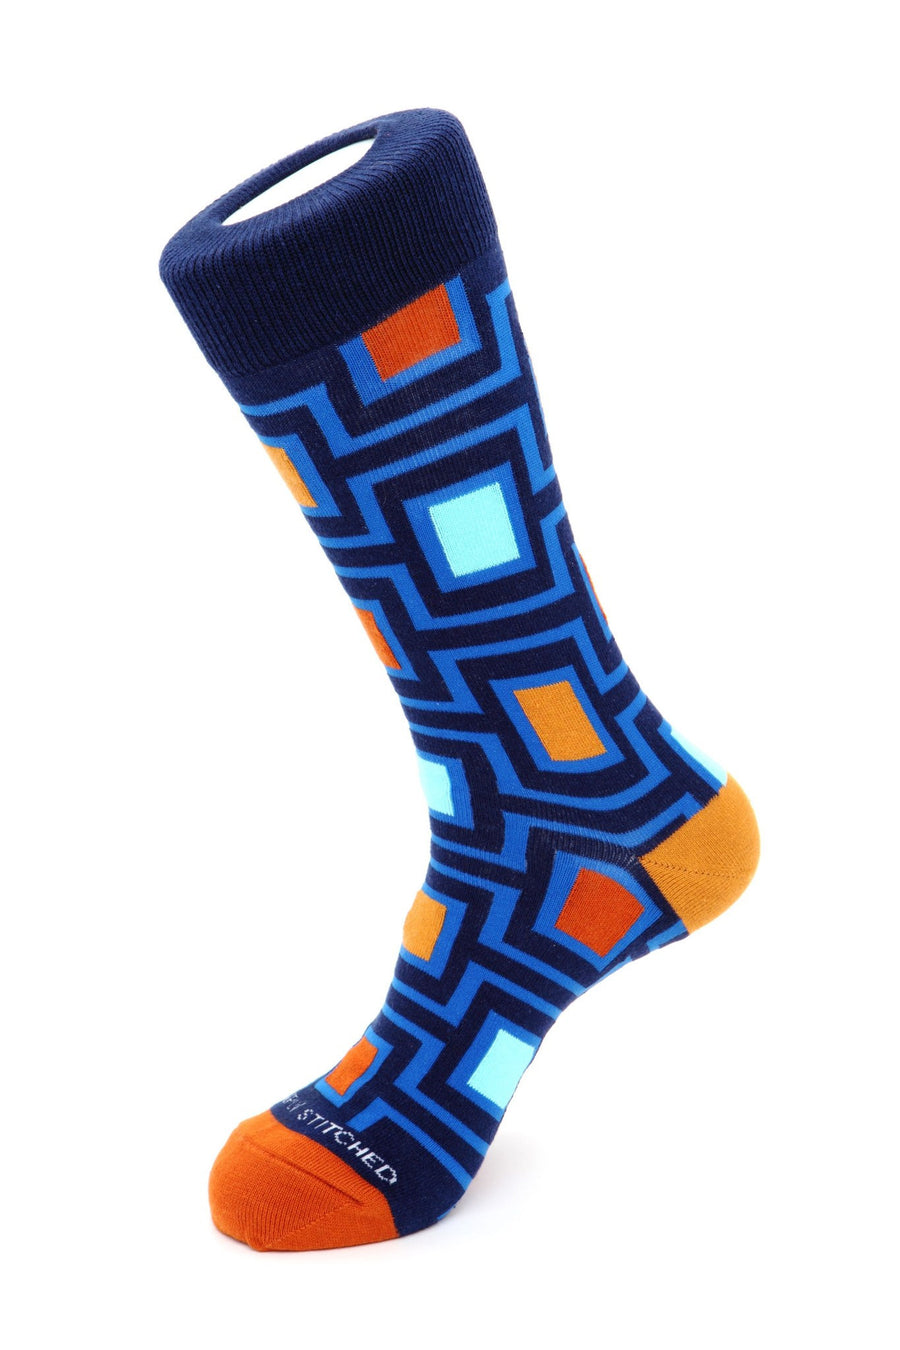 Maze Sock